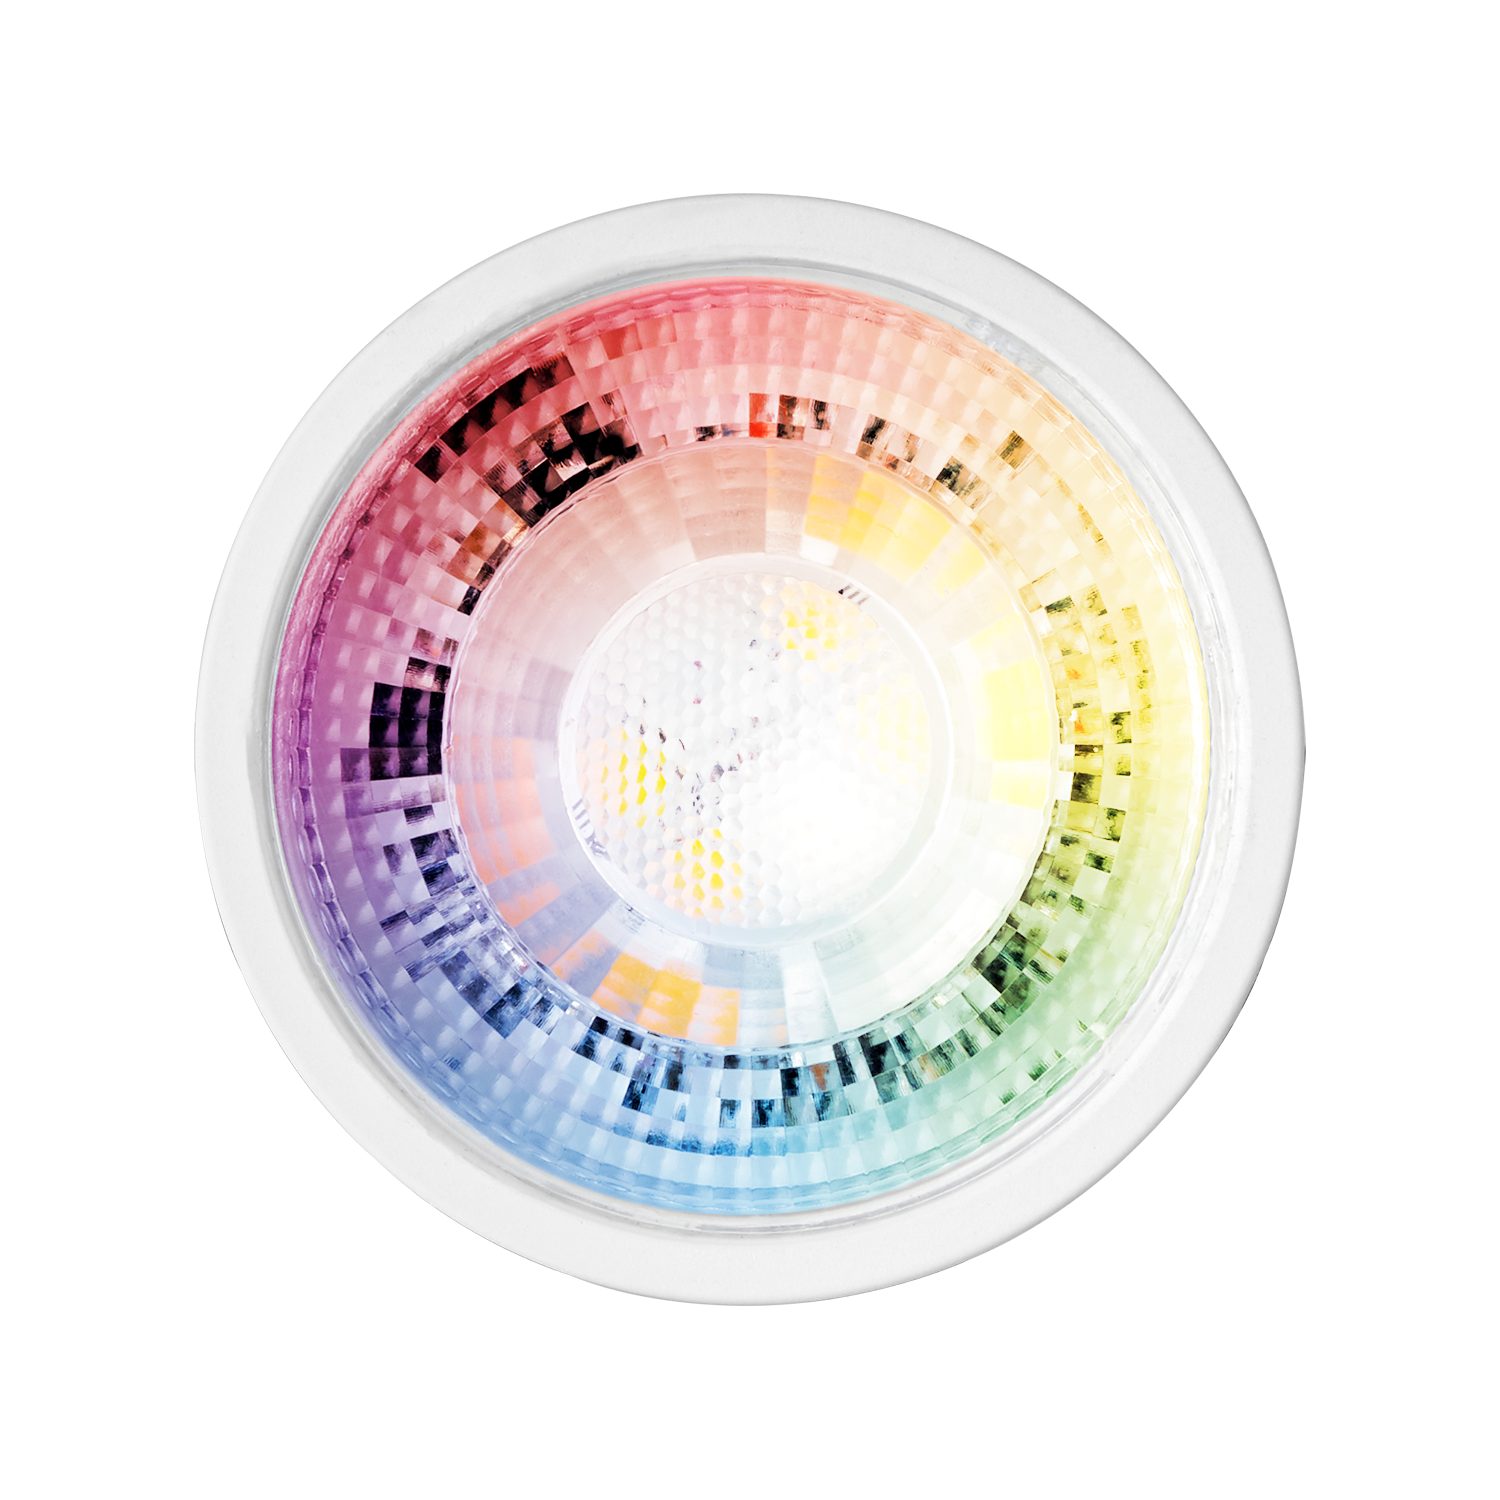 Einbaustrahler Einbaustrahler LED von LEDANDO LED in LED 3W GU10 Set Kristall 3er mit RGB Glas /